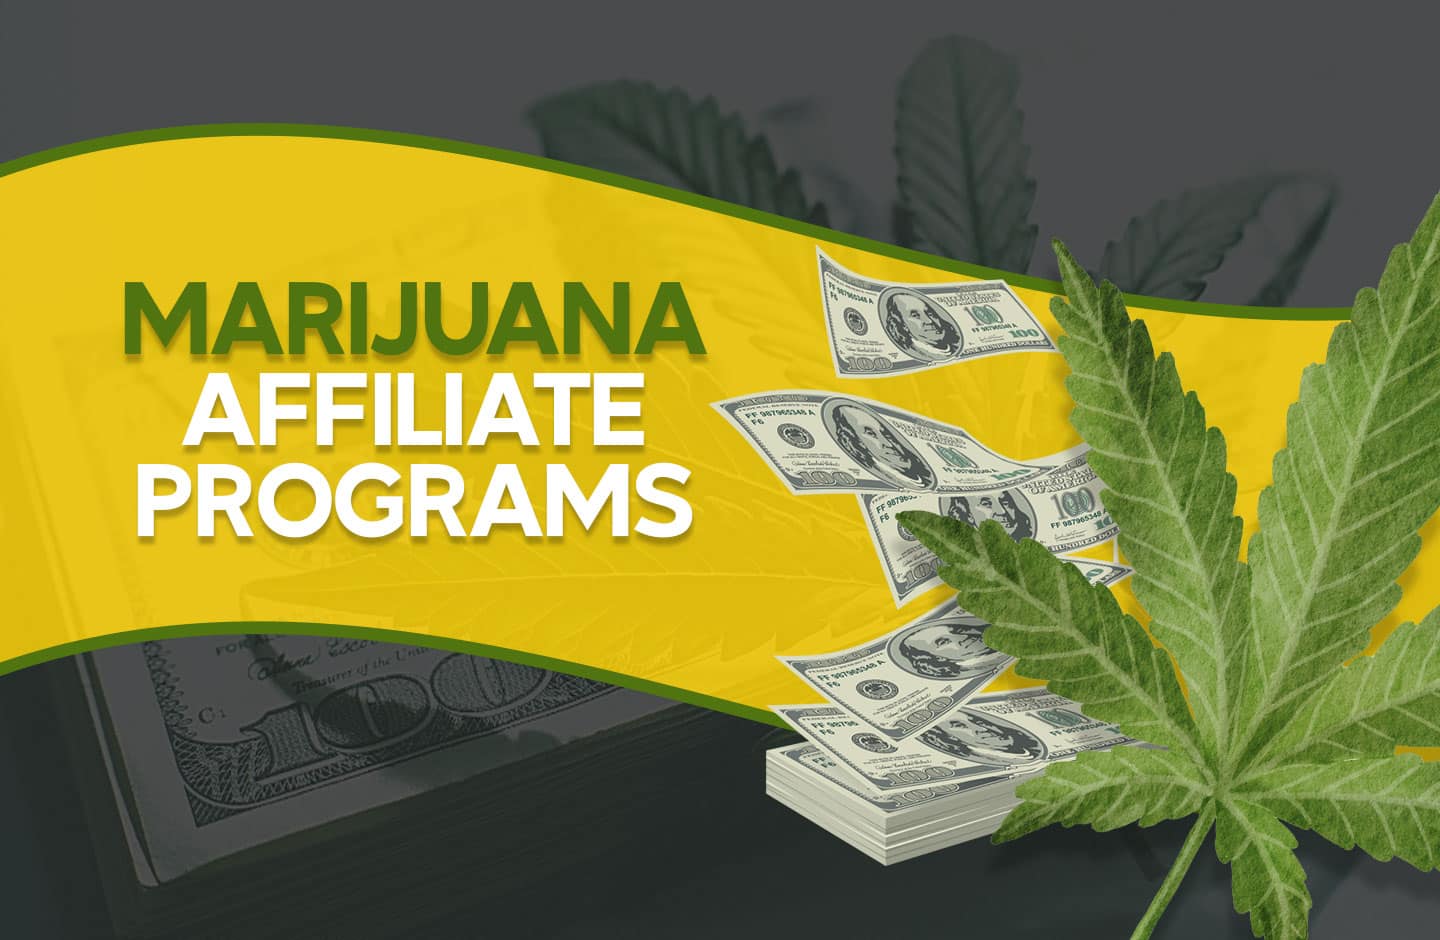 Marijuana affiliate programs